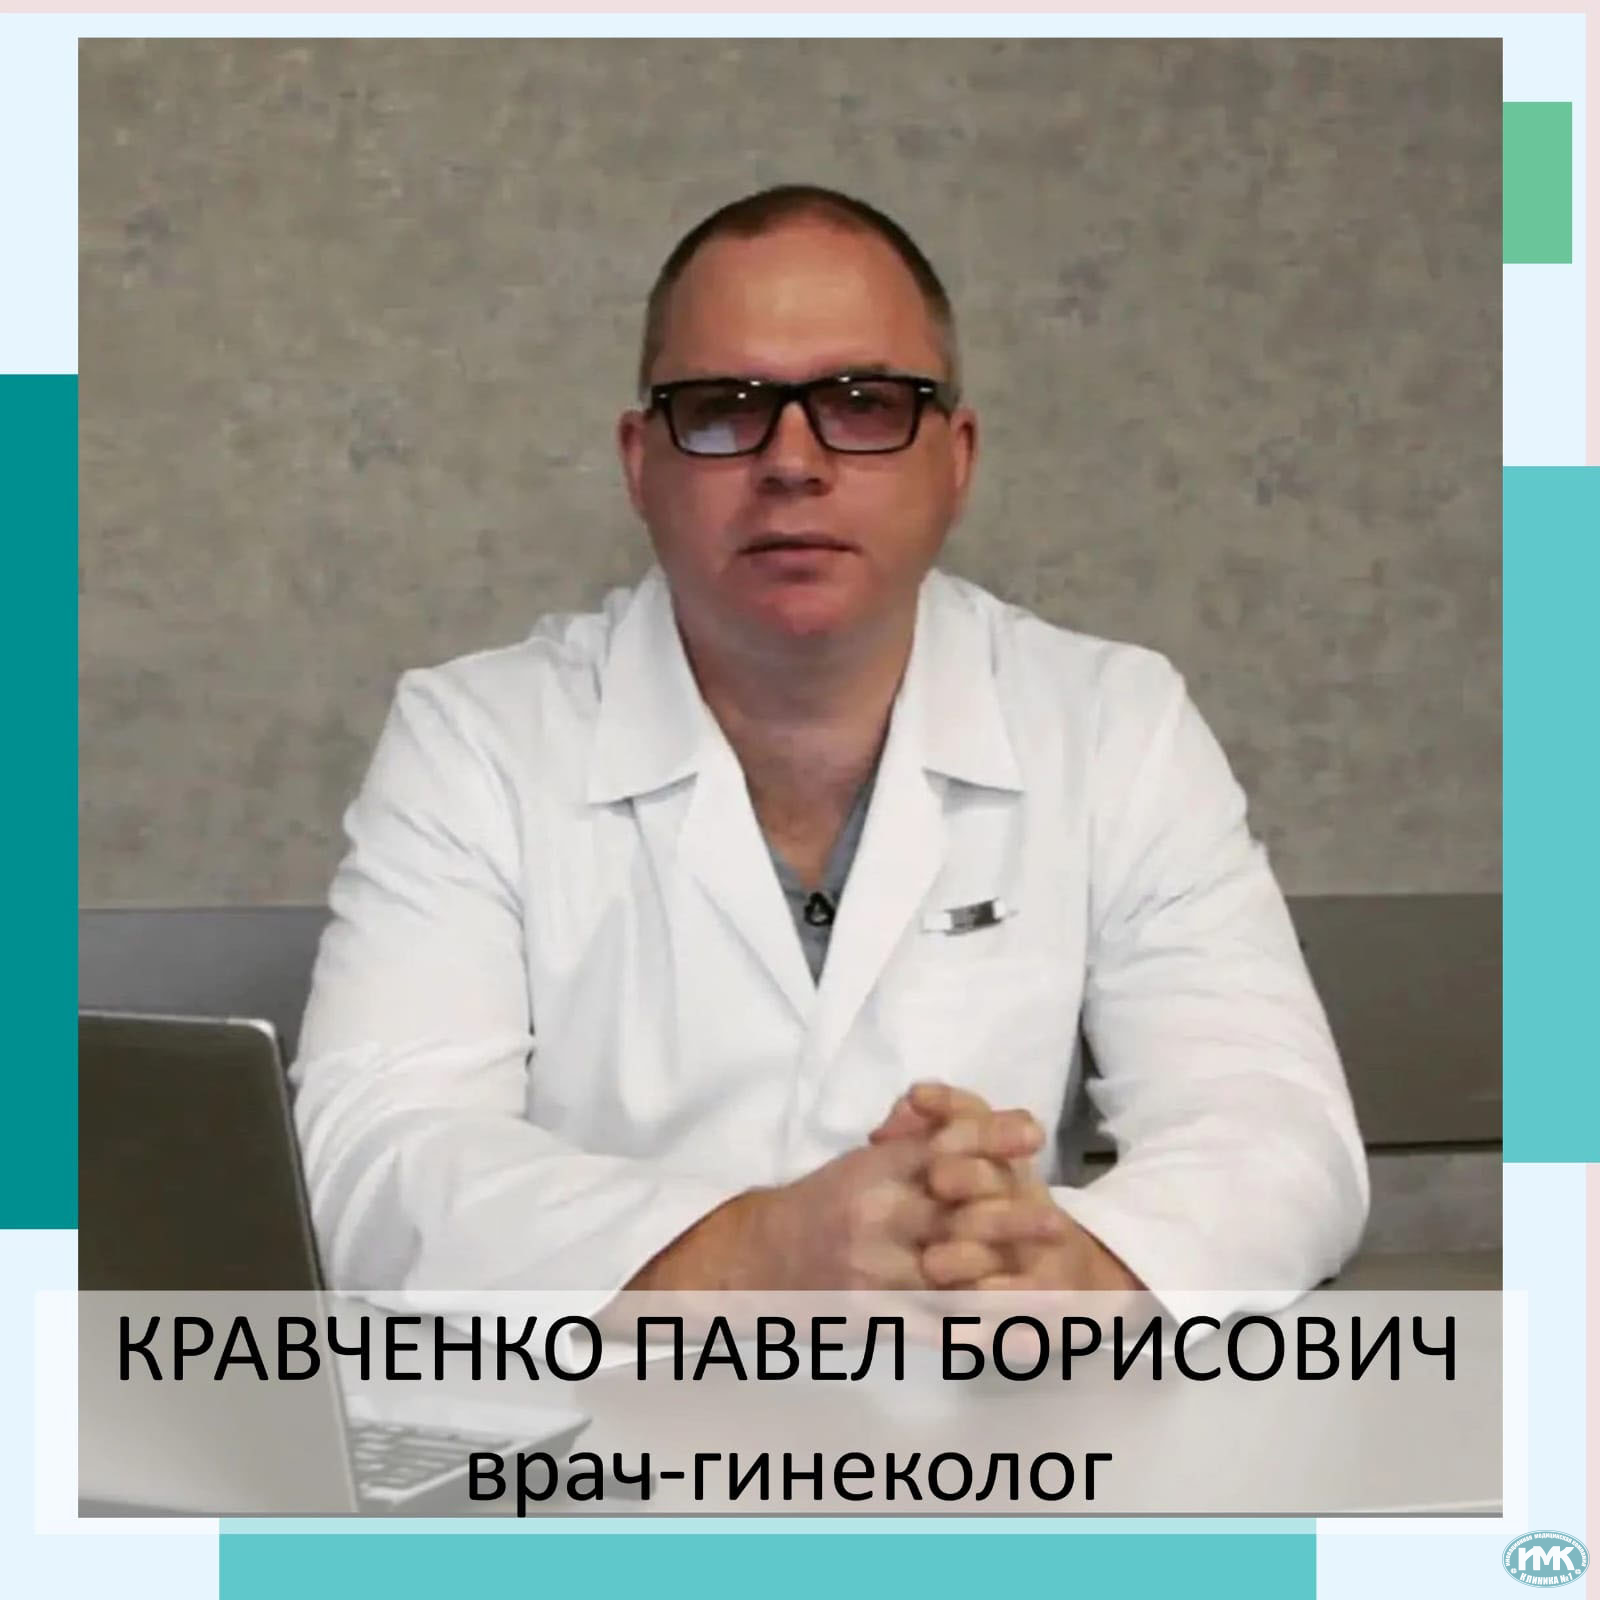 Павел Борисович Кравченко  врач-гинеколог